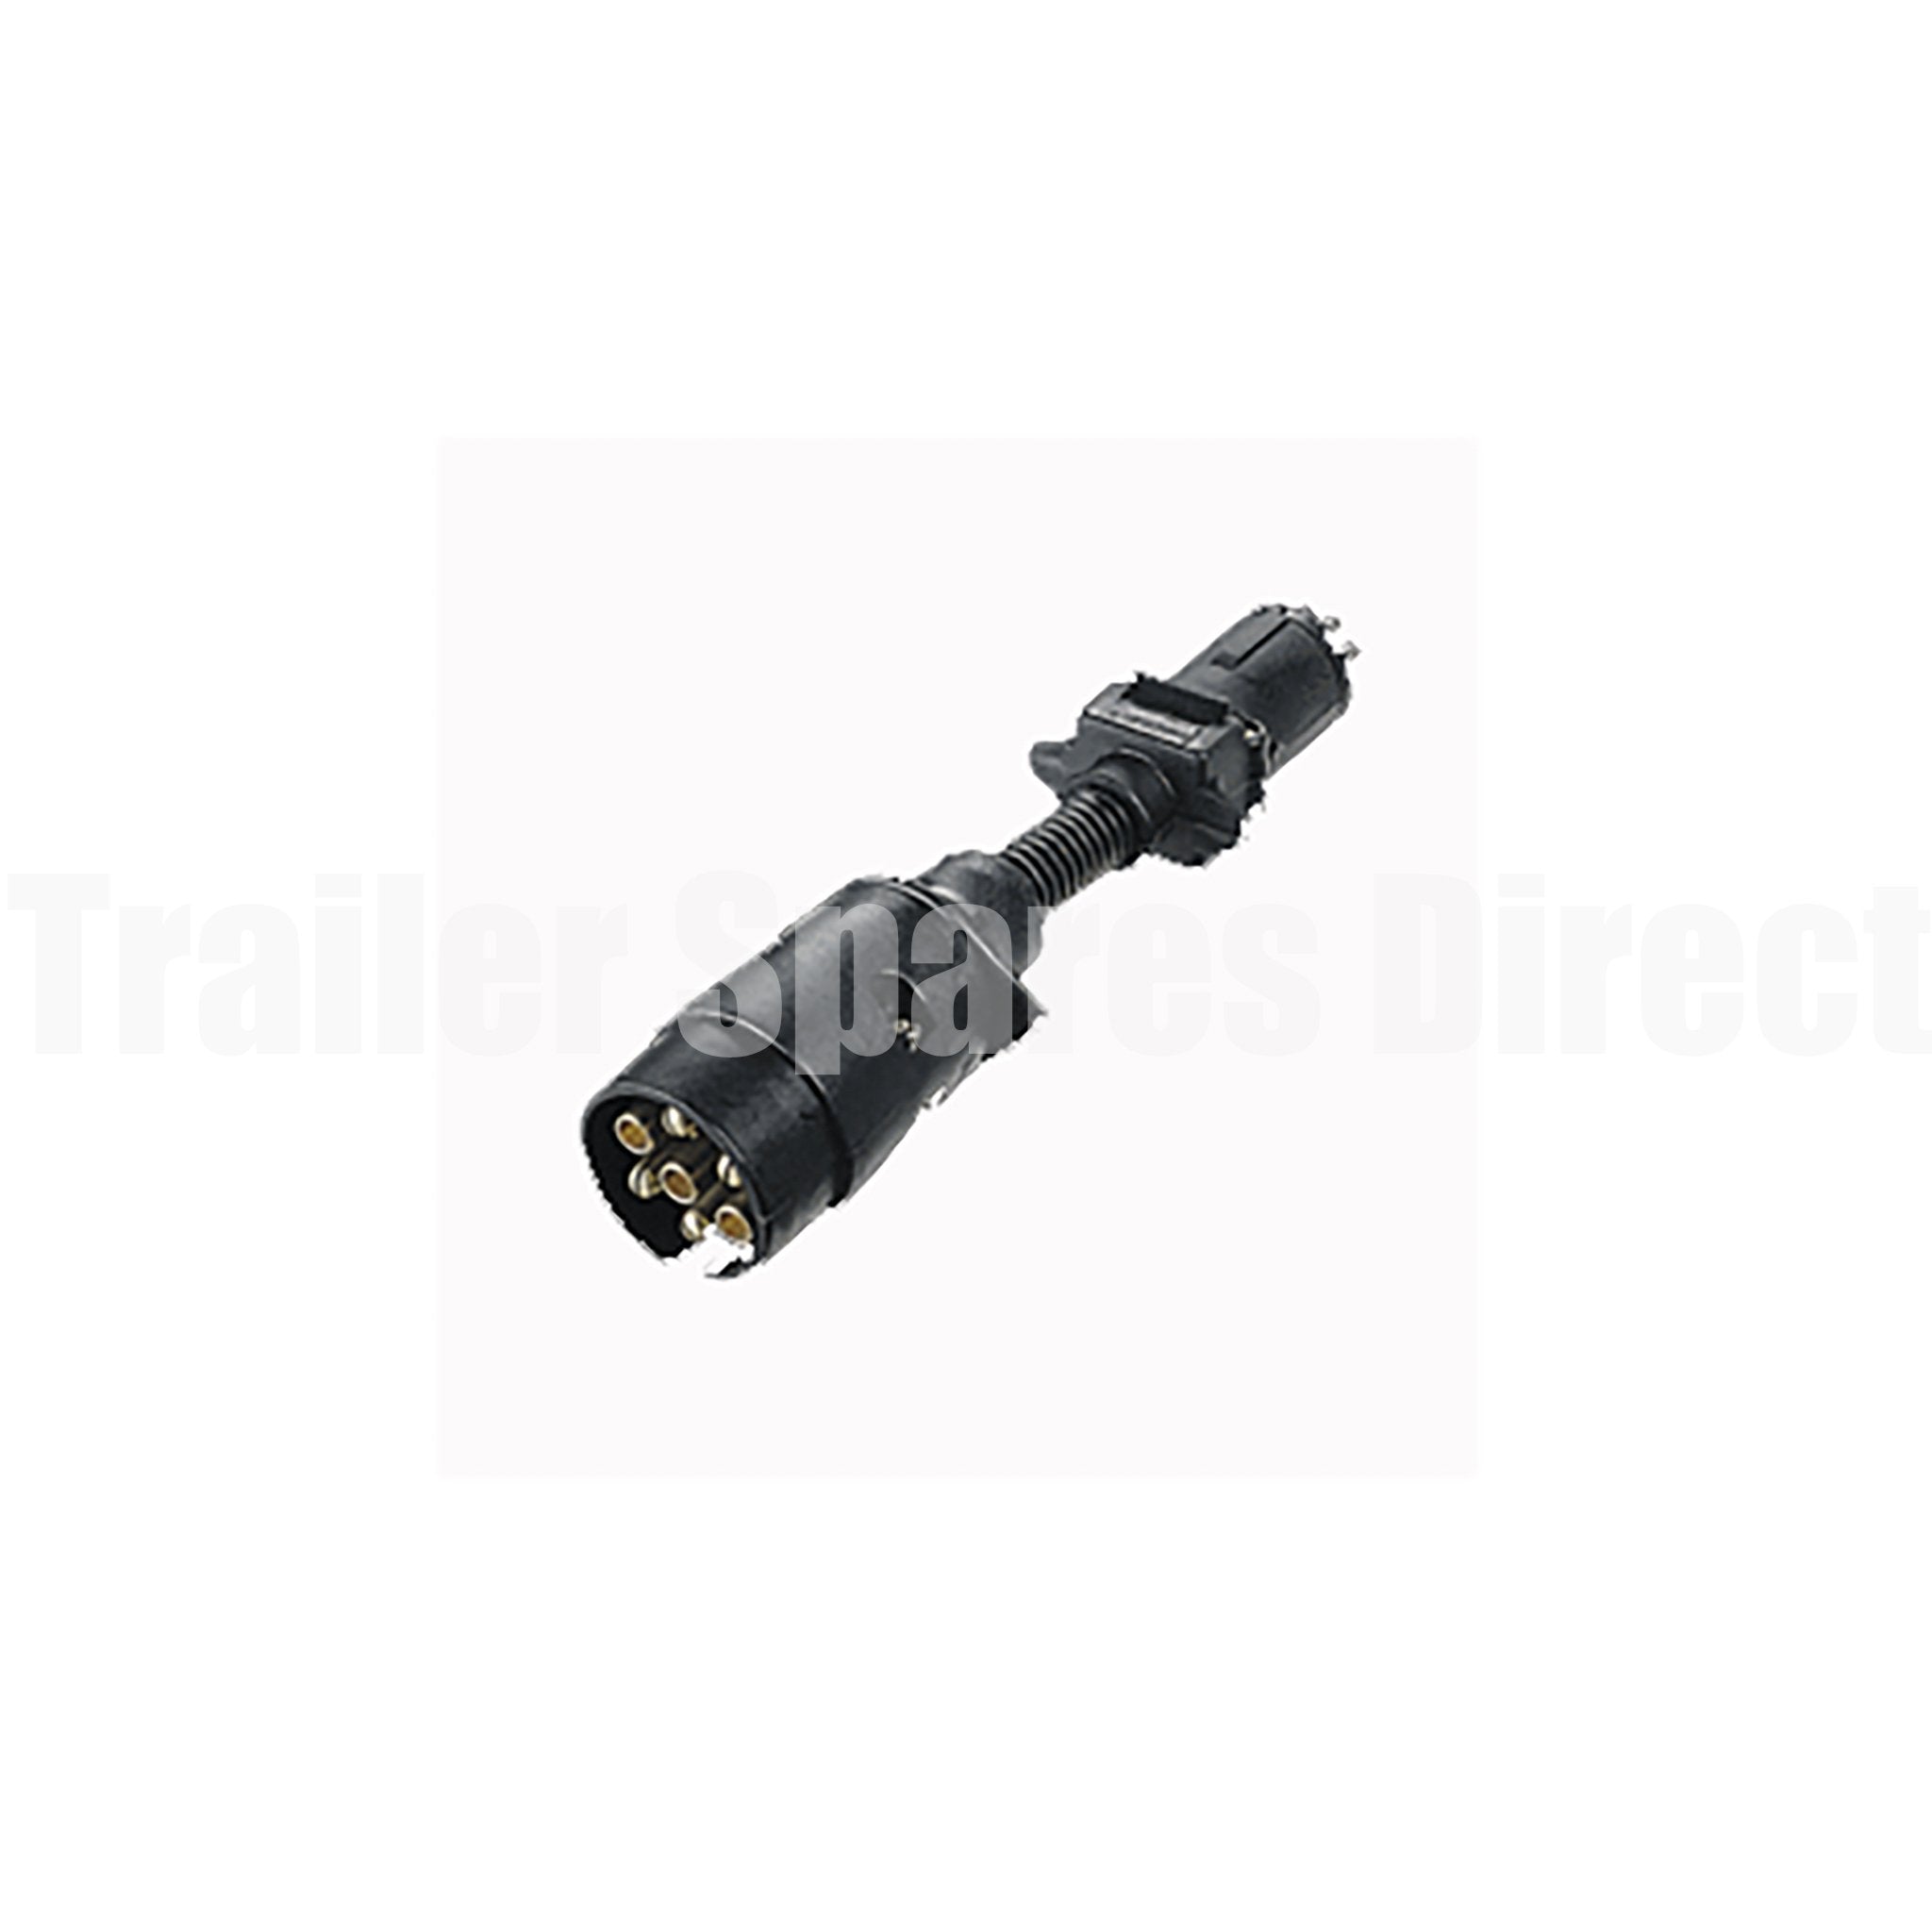 trailer plug adaptor 7 pin large round socket to 6 pin small round plug